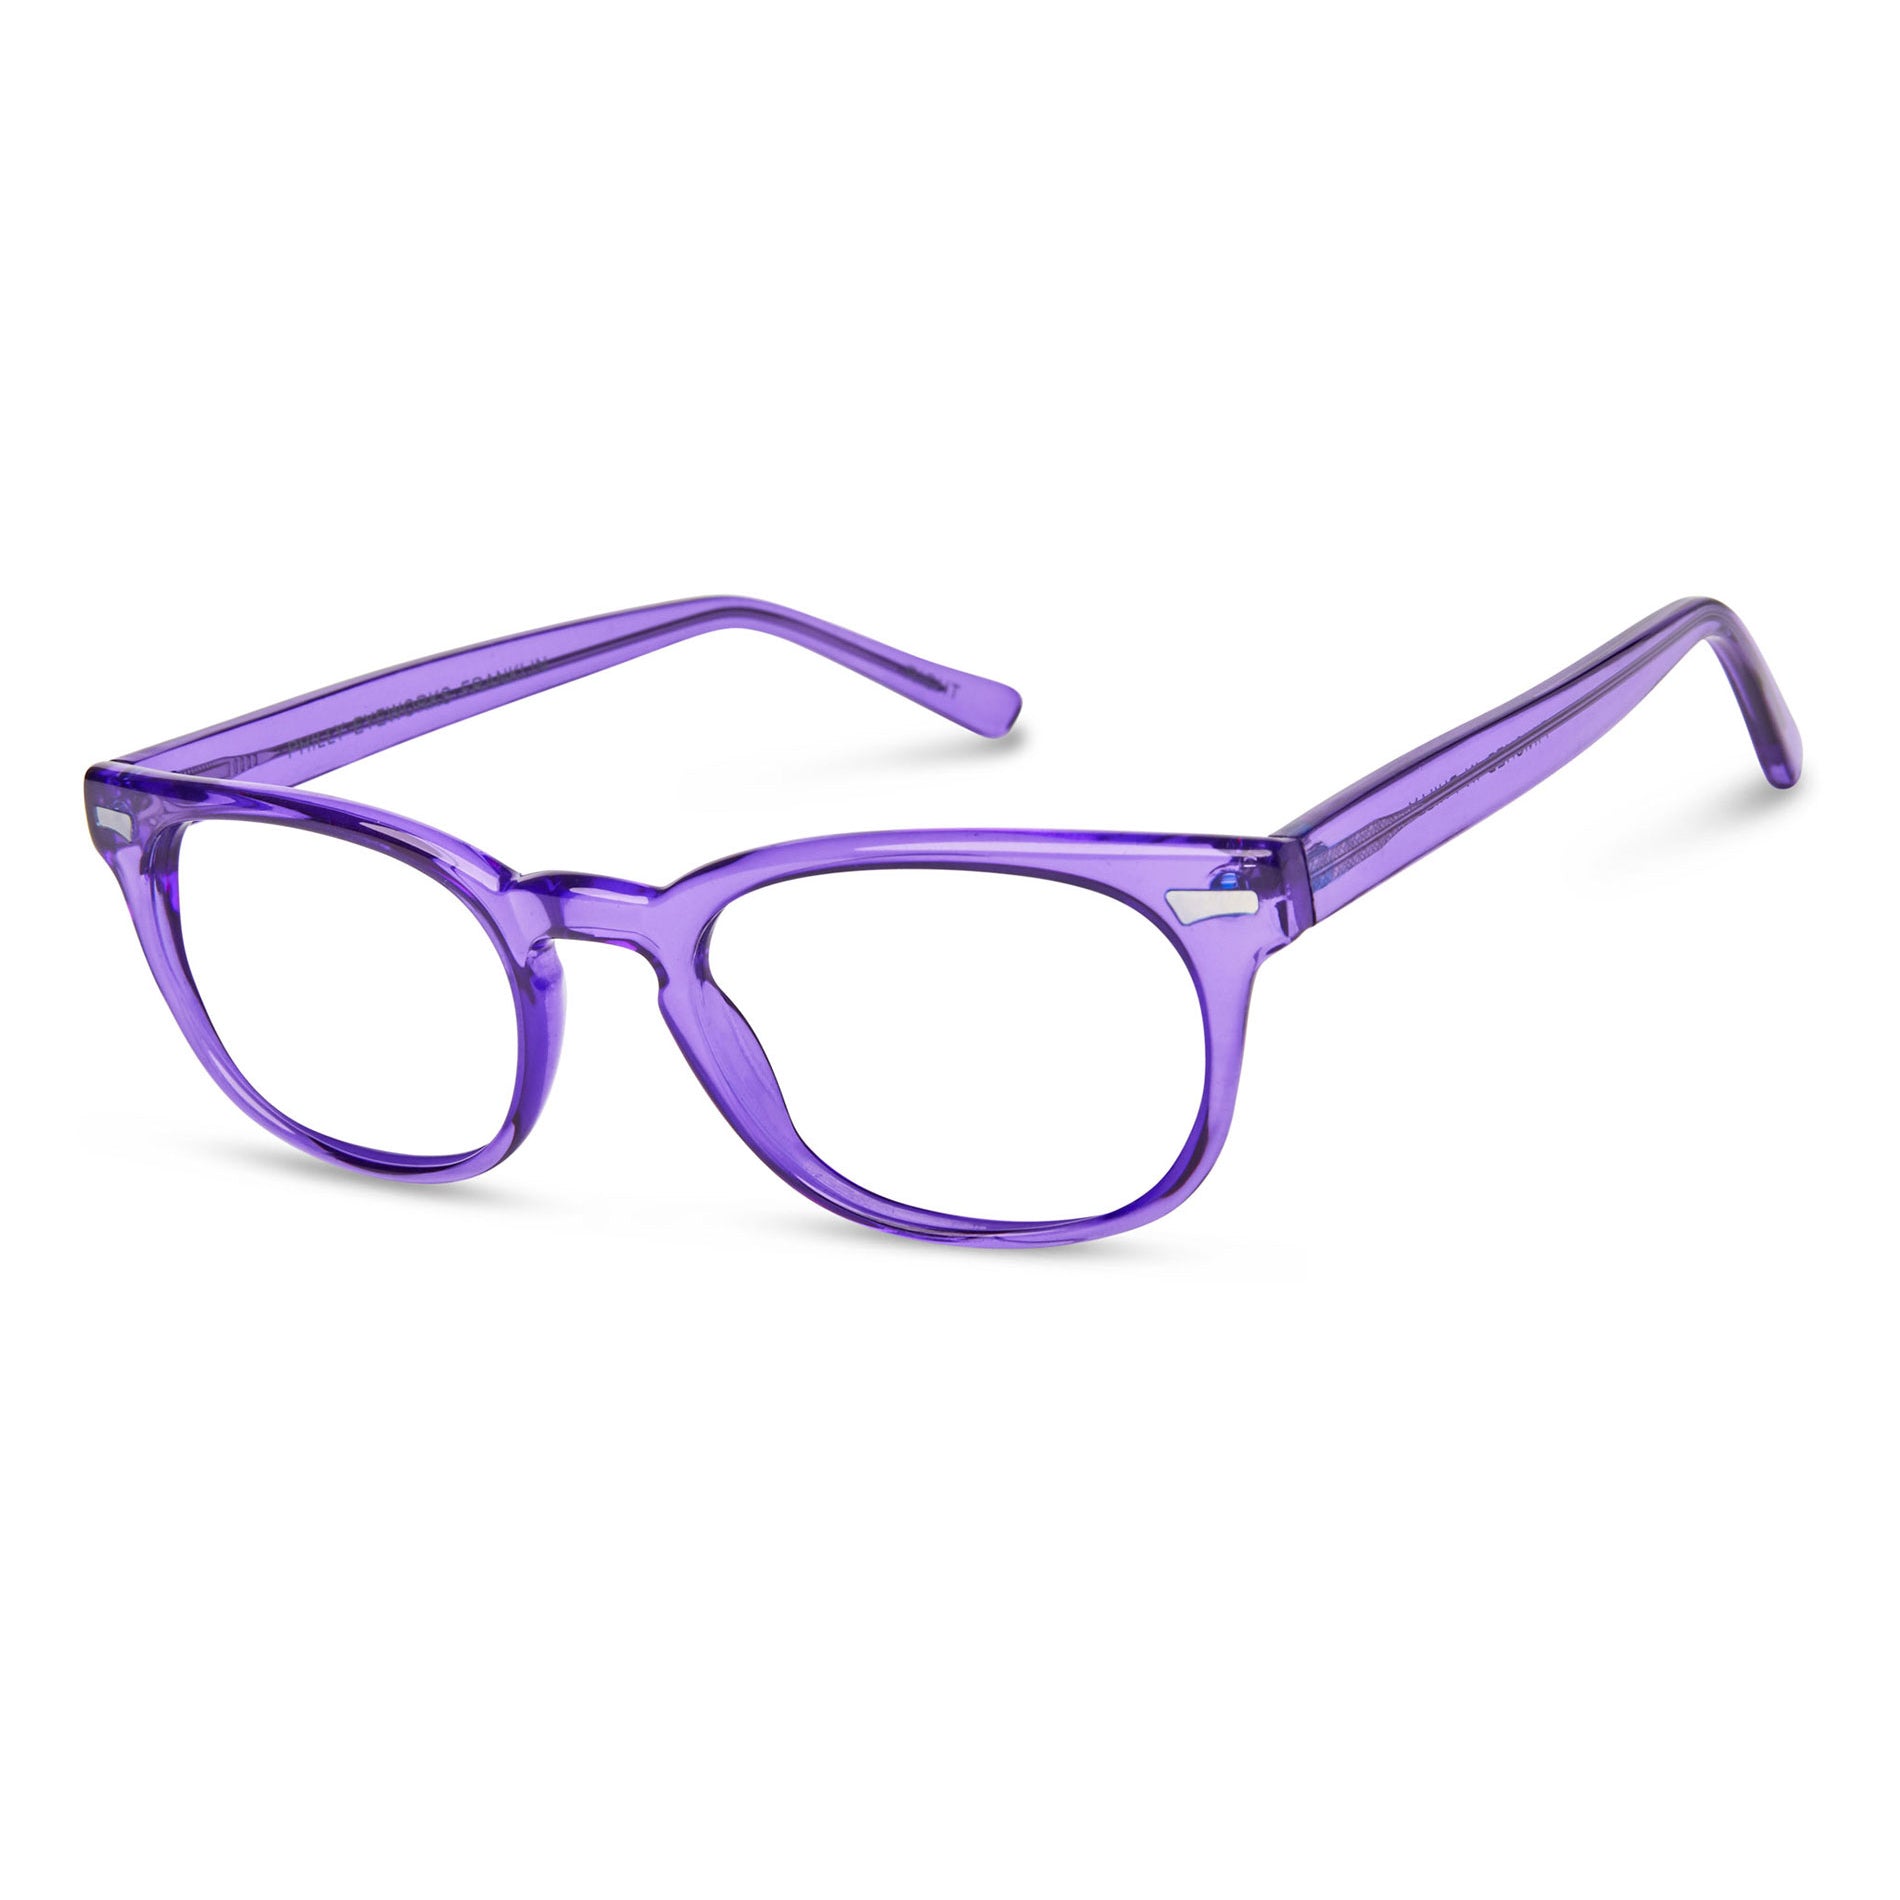 Franklin Glasses